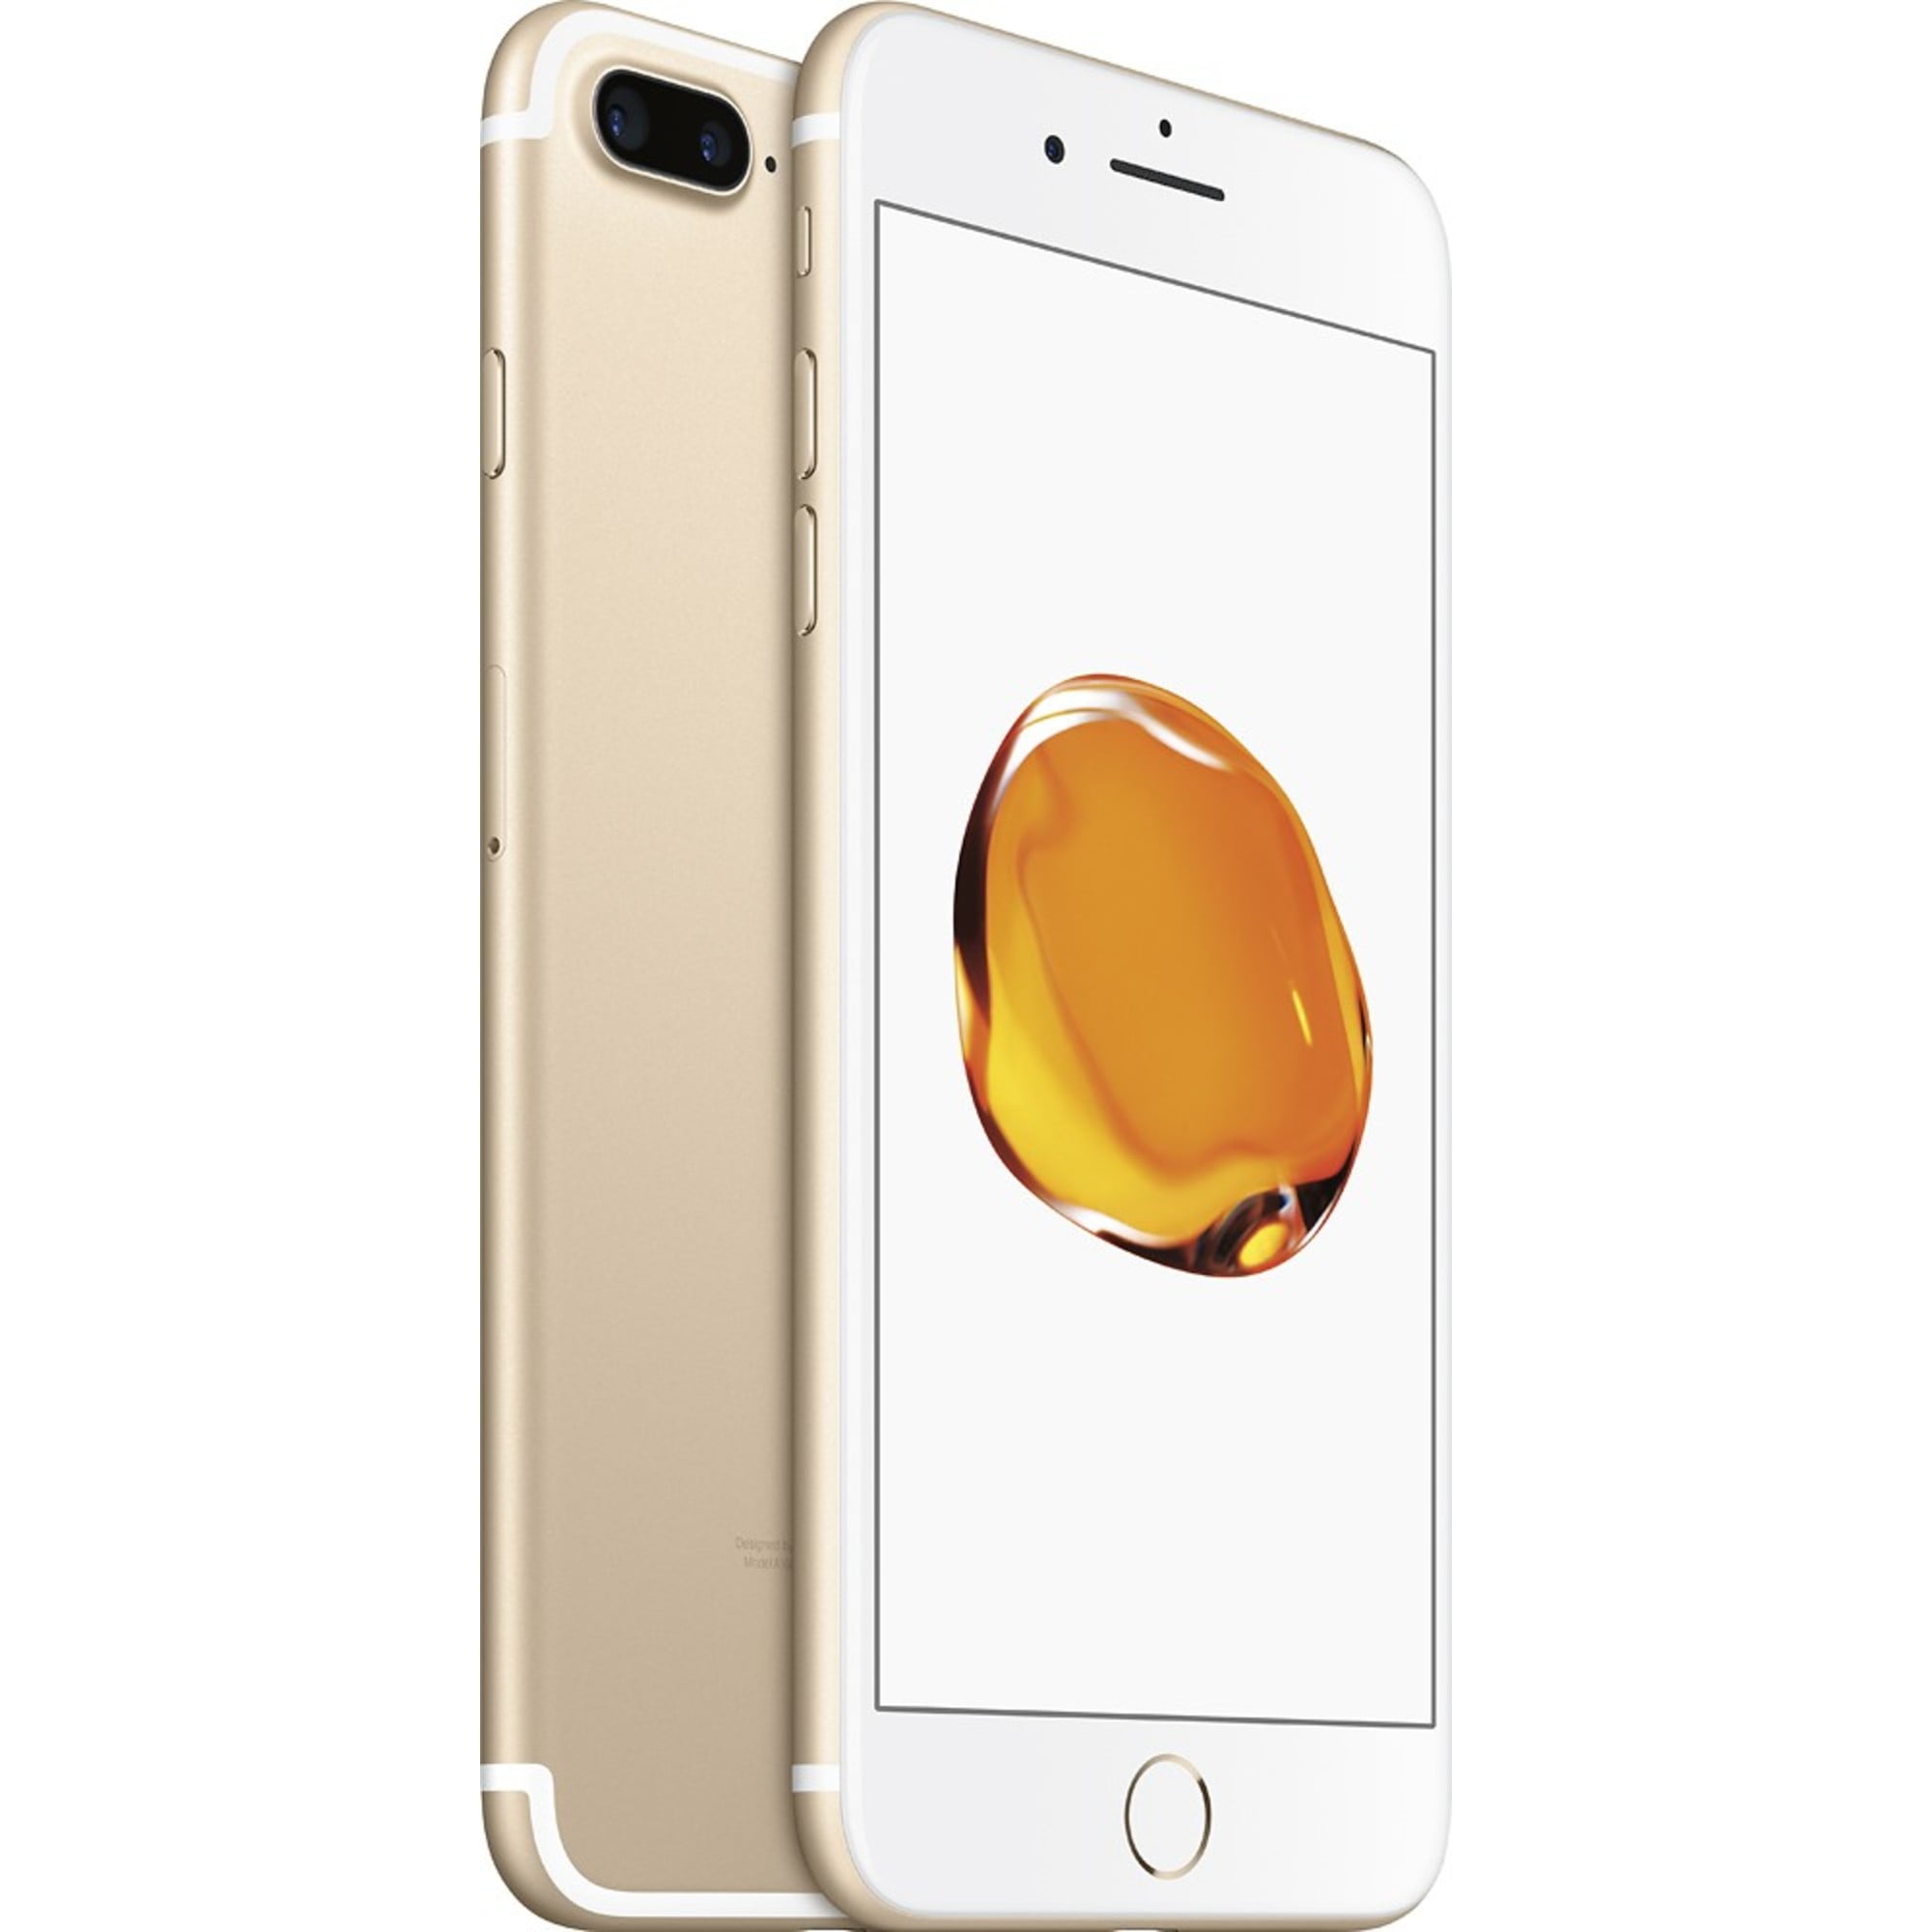 Apple iPhone 7 Plus 128GB Fully Unlocked (Verizon + Sprint + GSM 